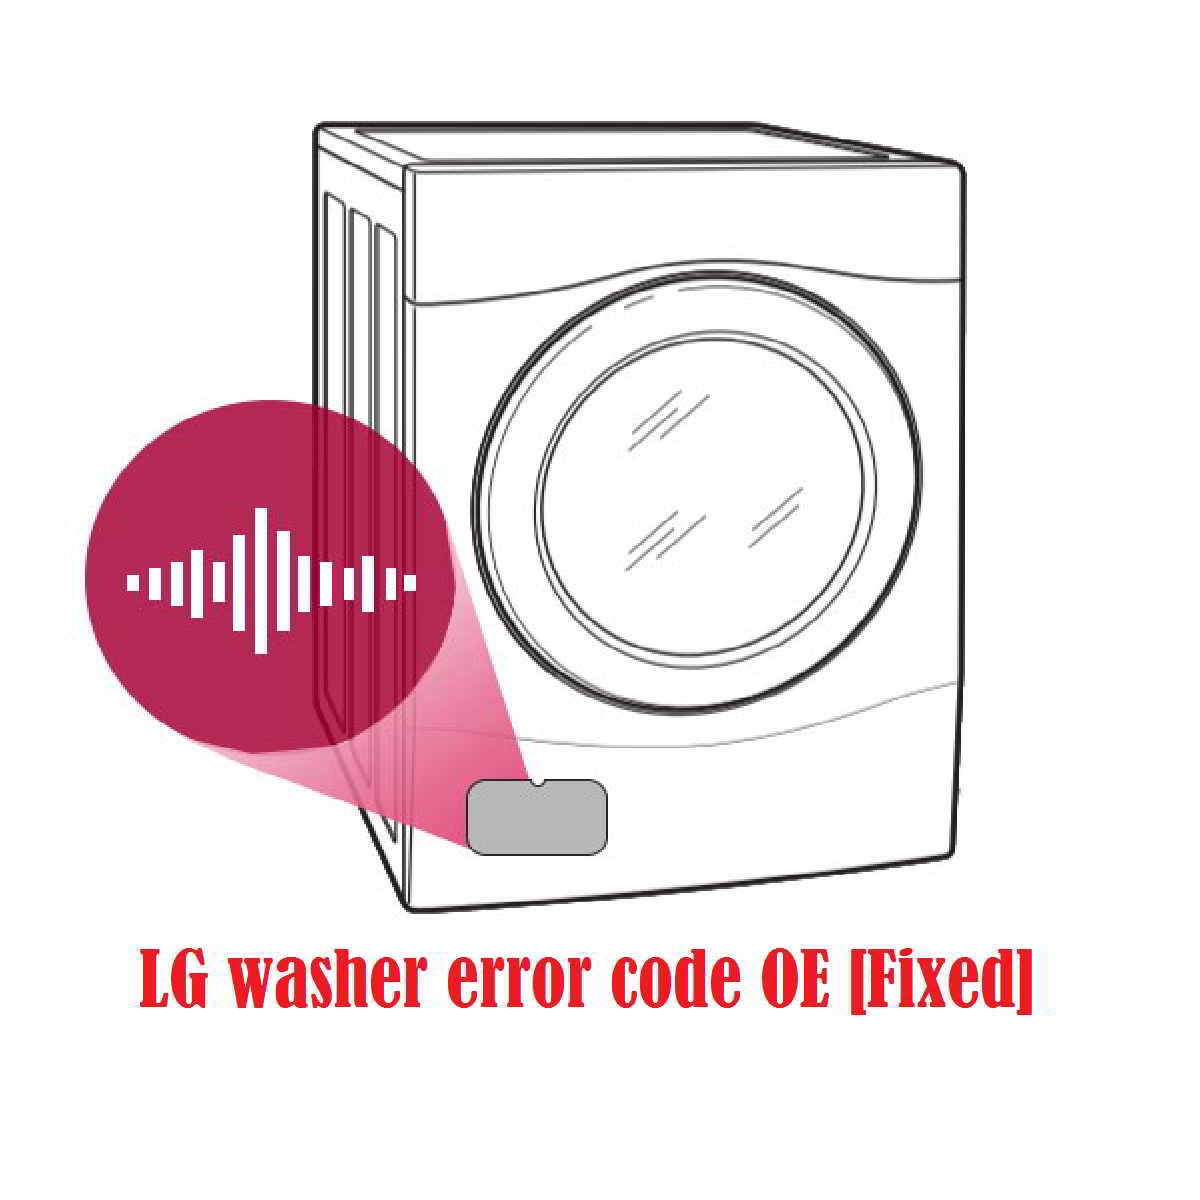 LG washer error code OE